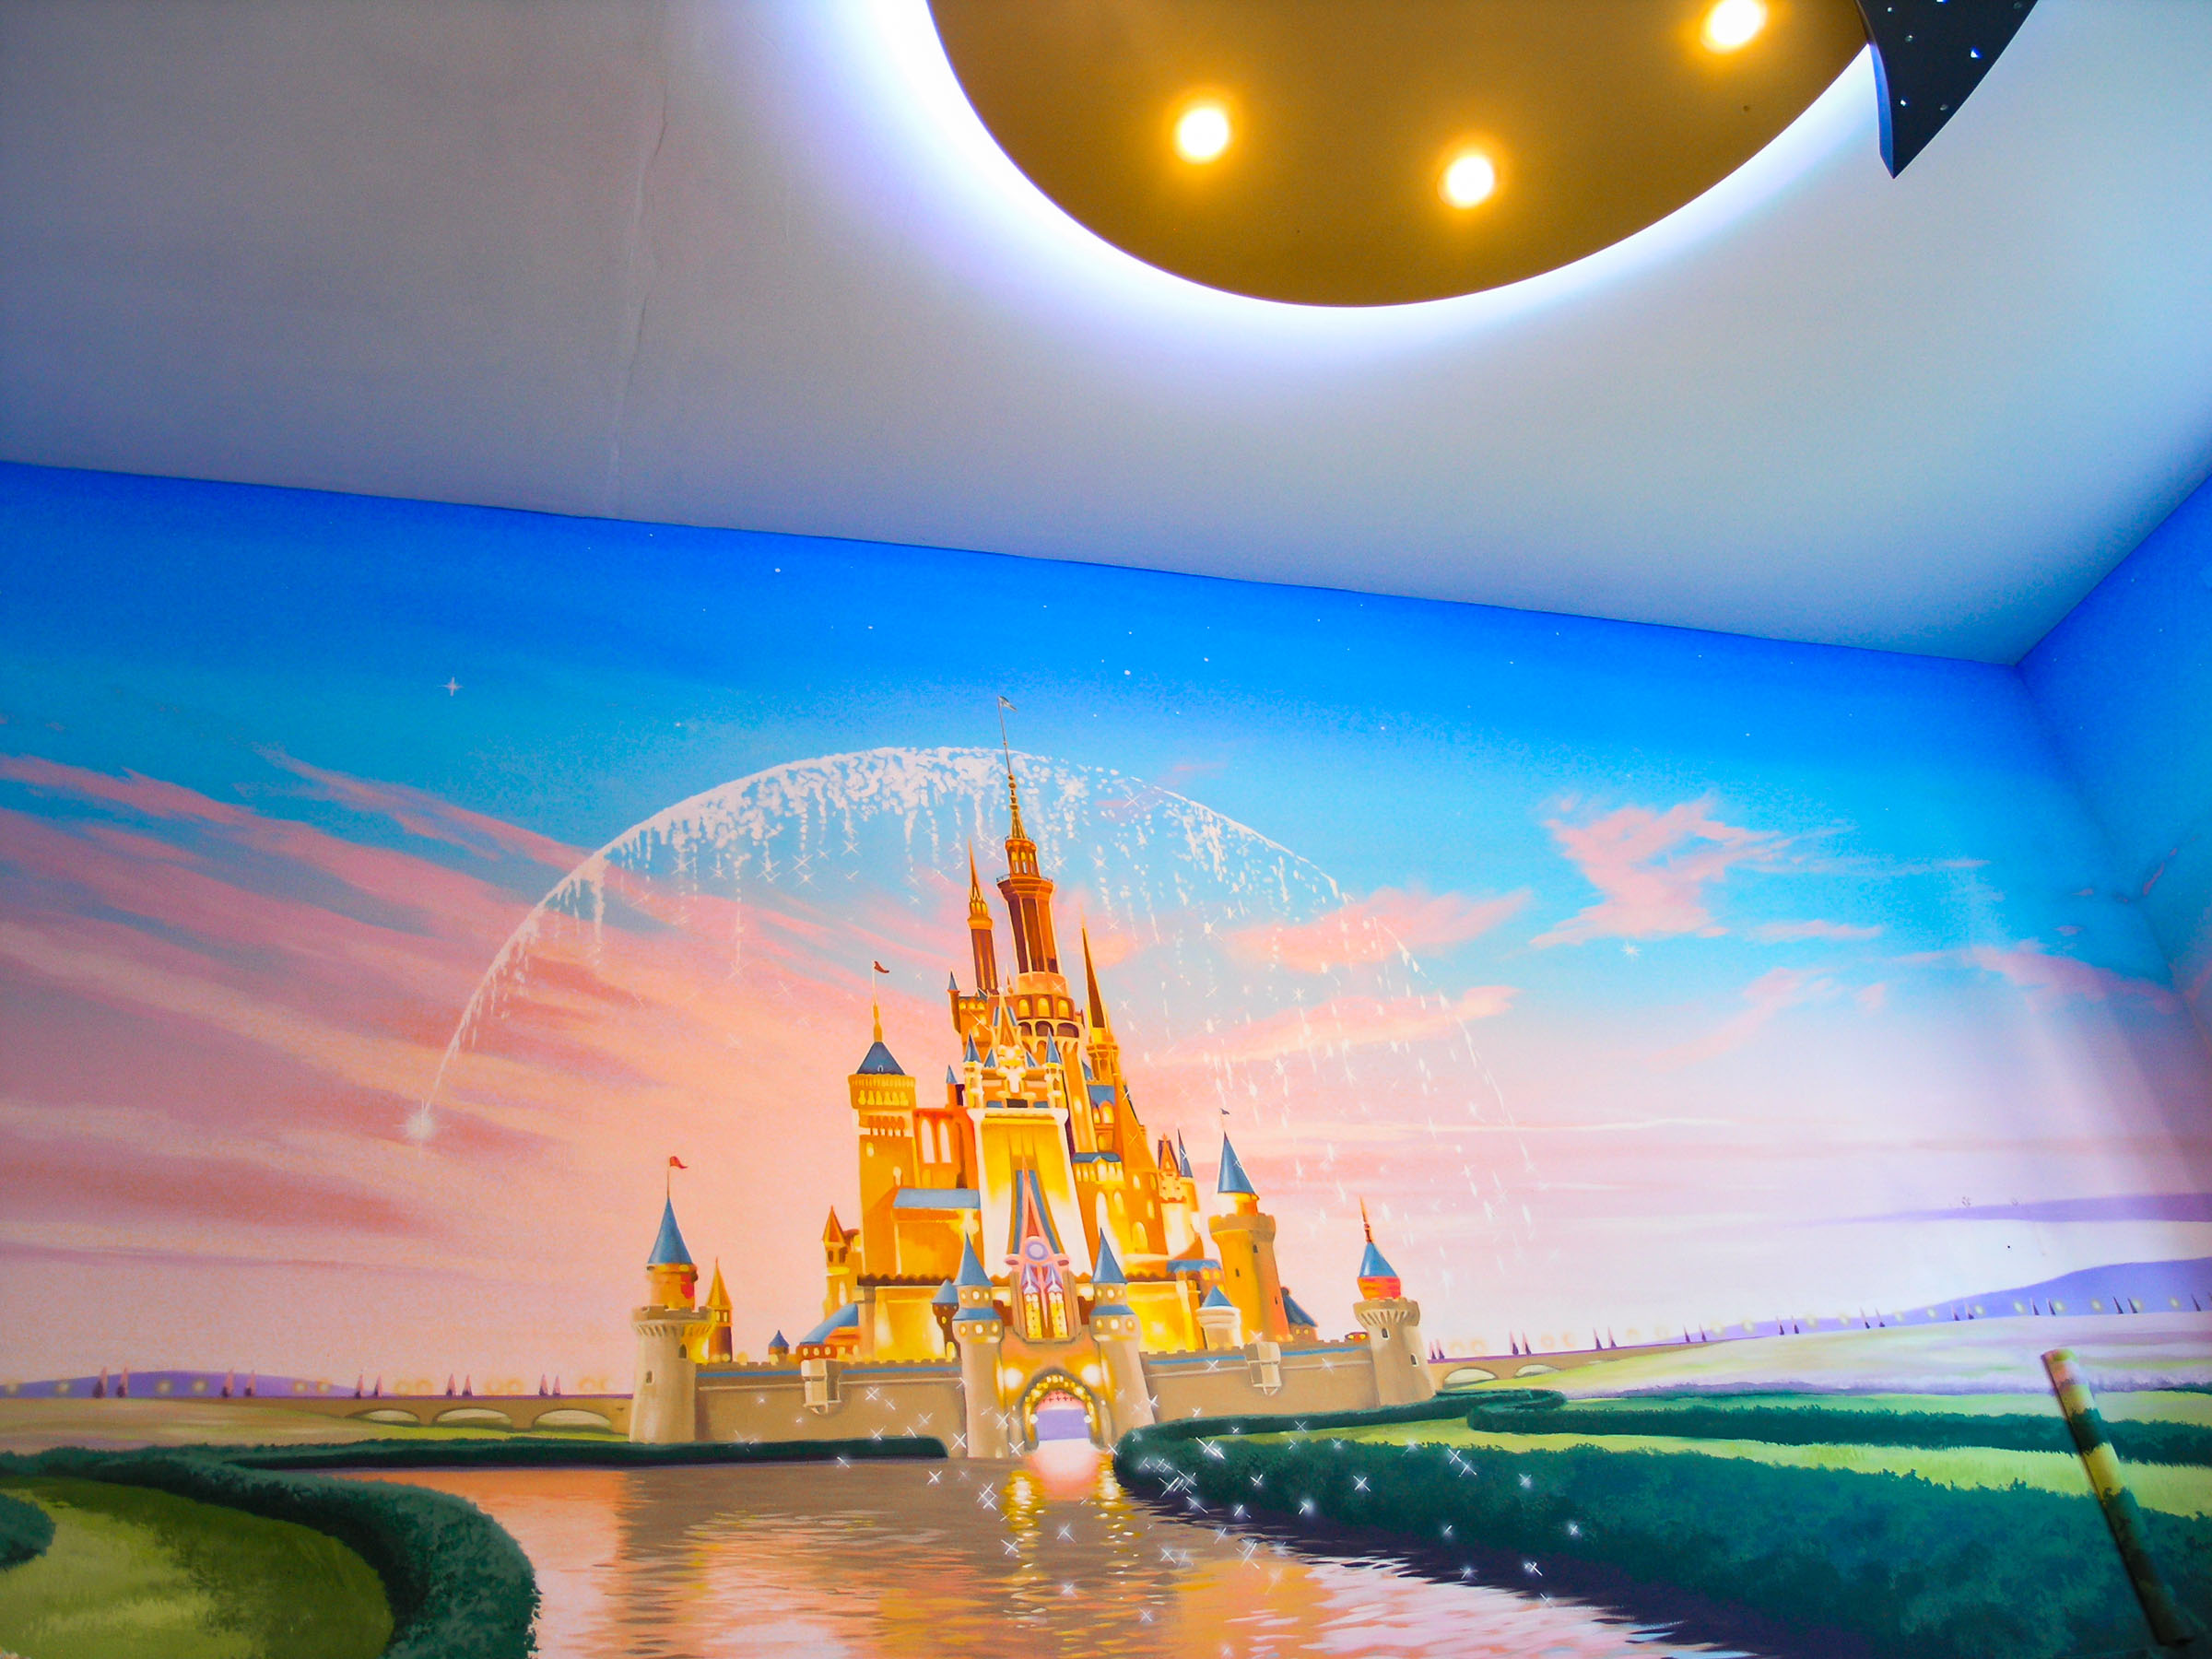 Disney Castle mural and ceiling light